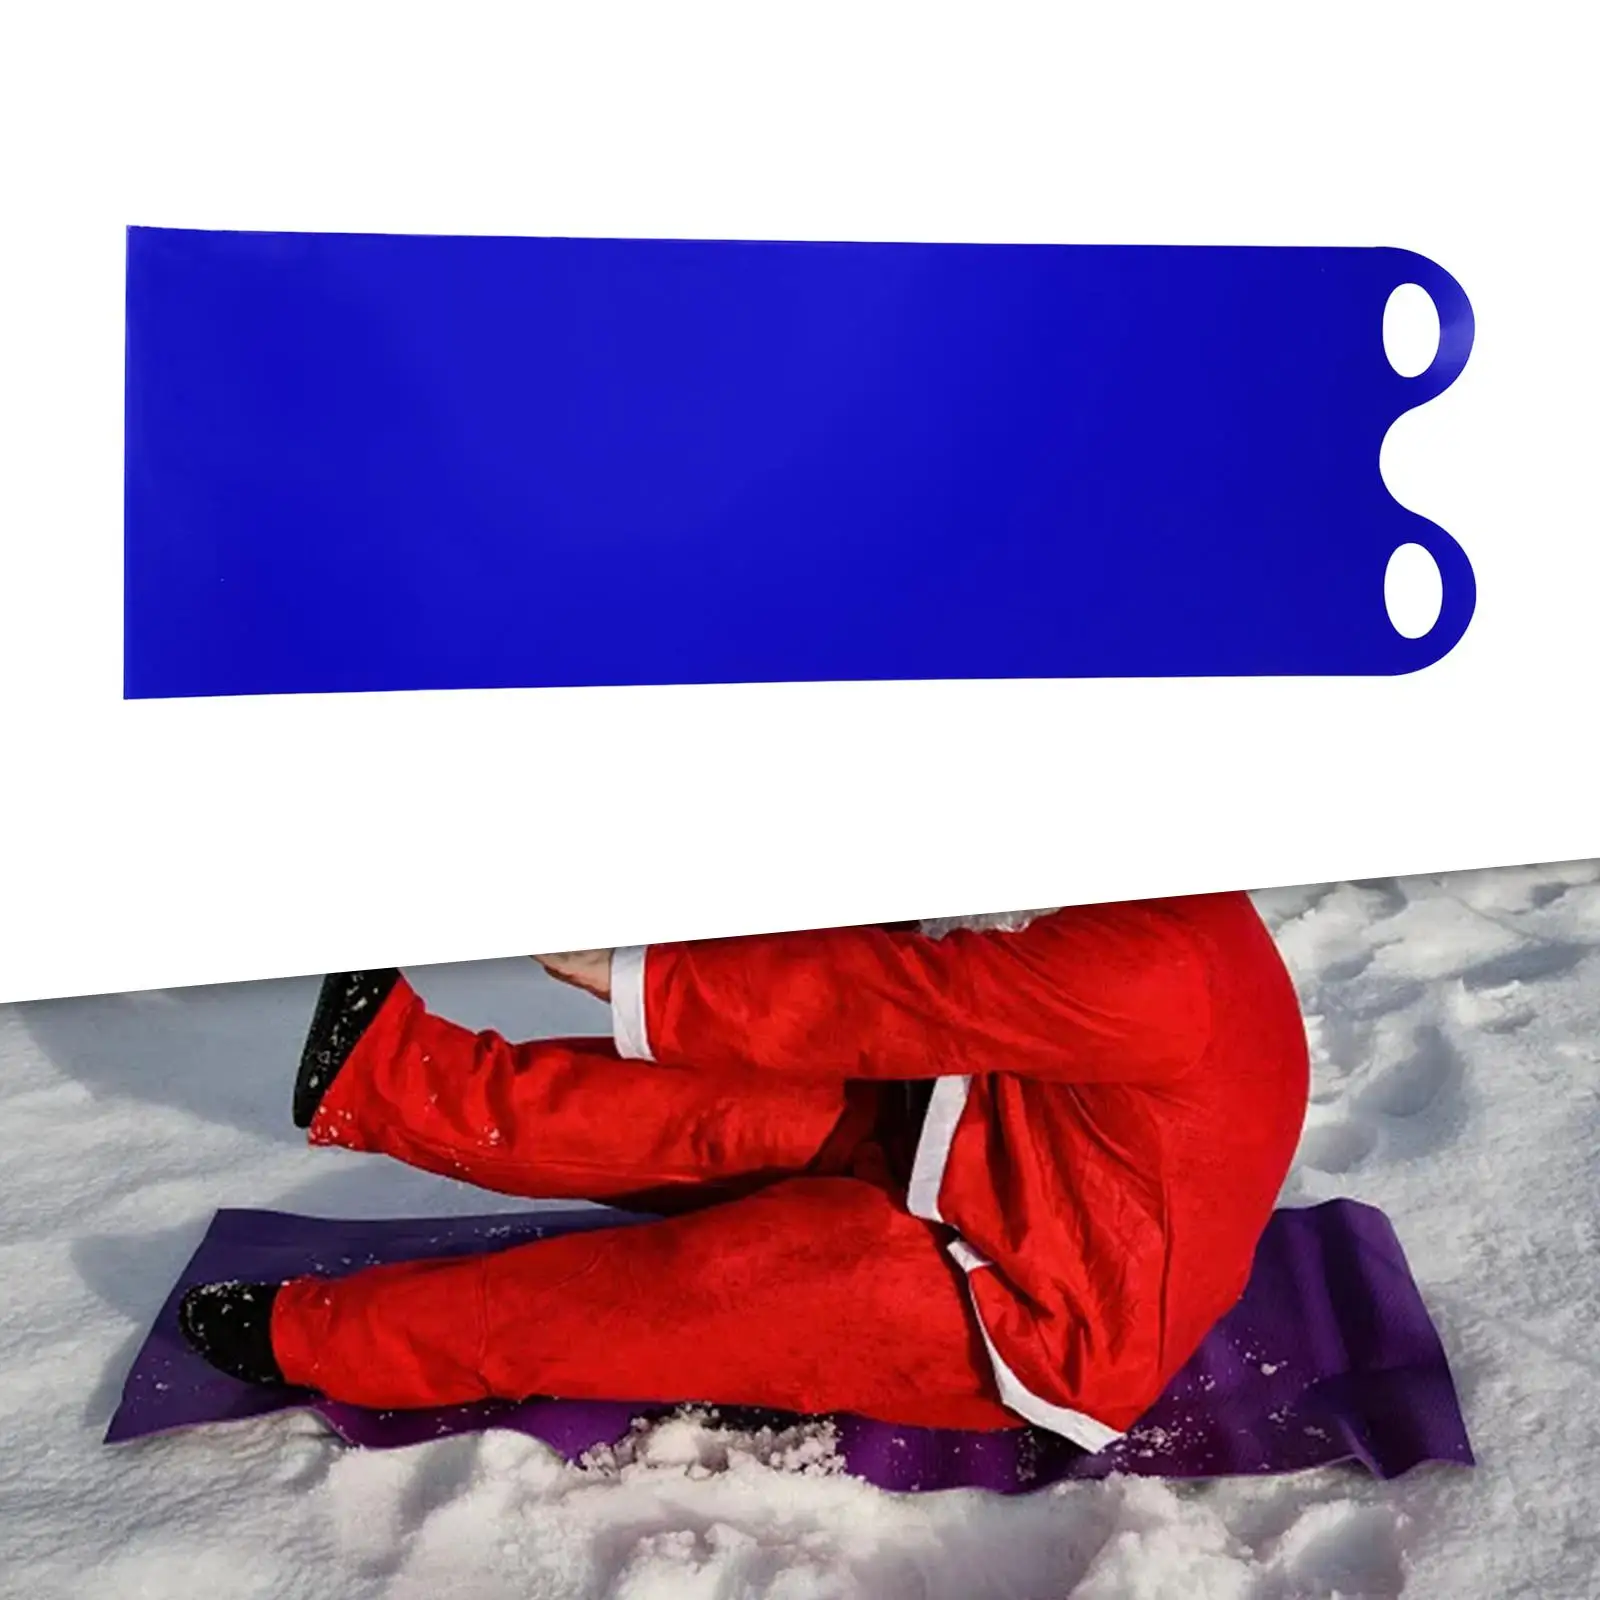 Flying Carpet Lightweight Roll Up Snow Sled Portable Rolling Snow Slide, Blue, 54